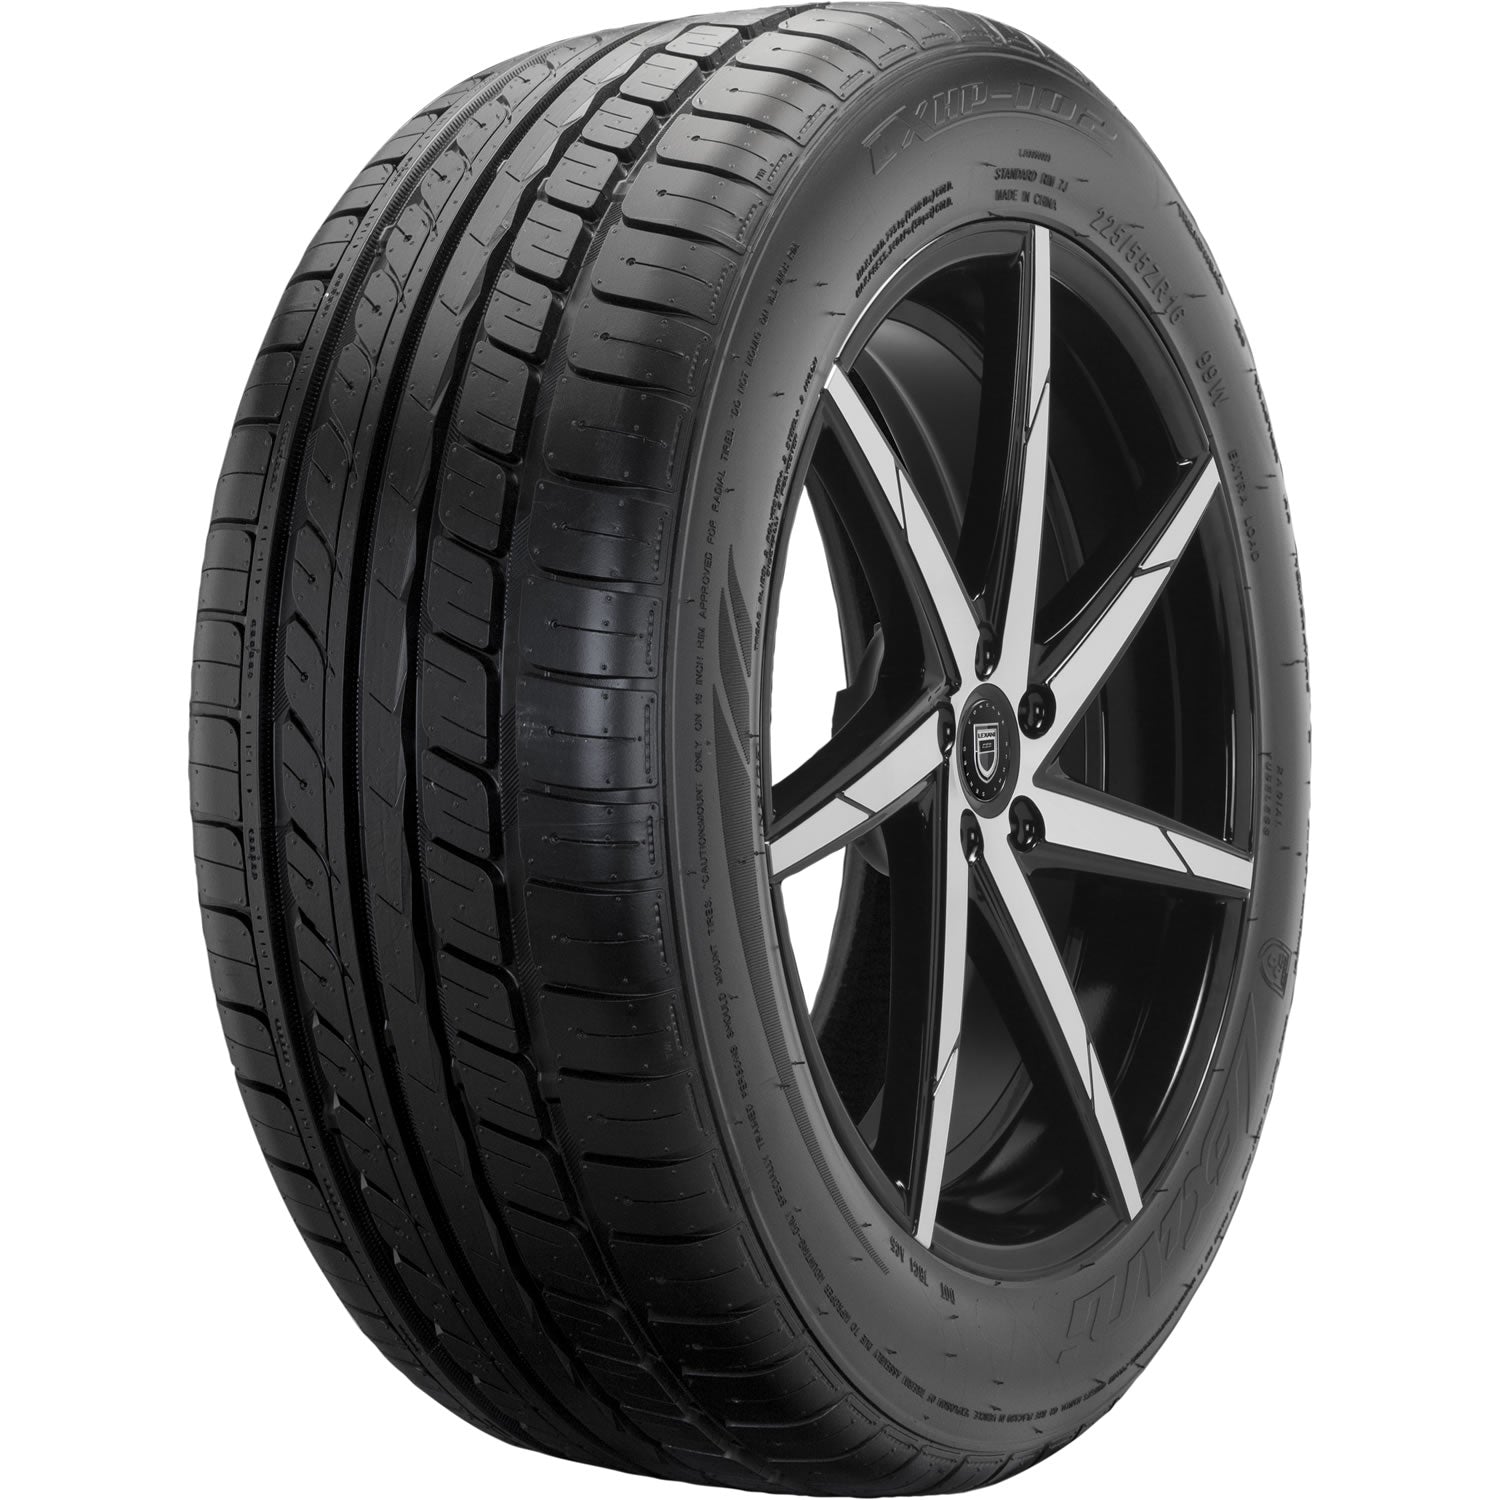 LEXANI LXHP-102 225/55ZR16 (25.7X9.2R 16) Tires